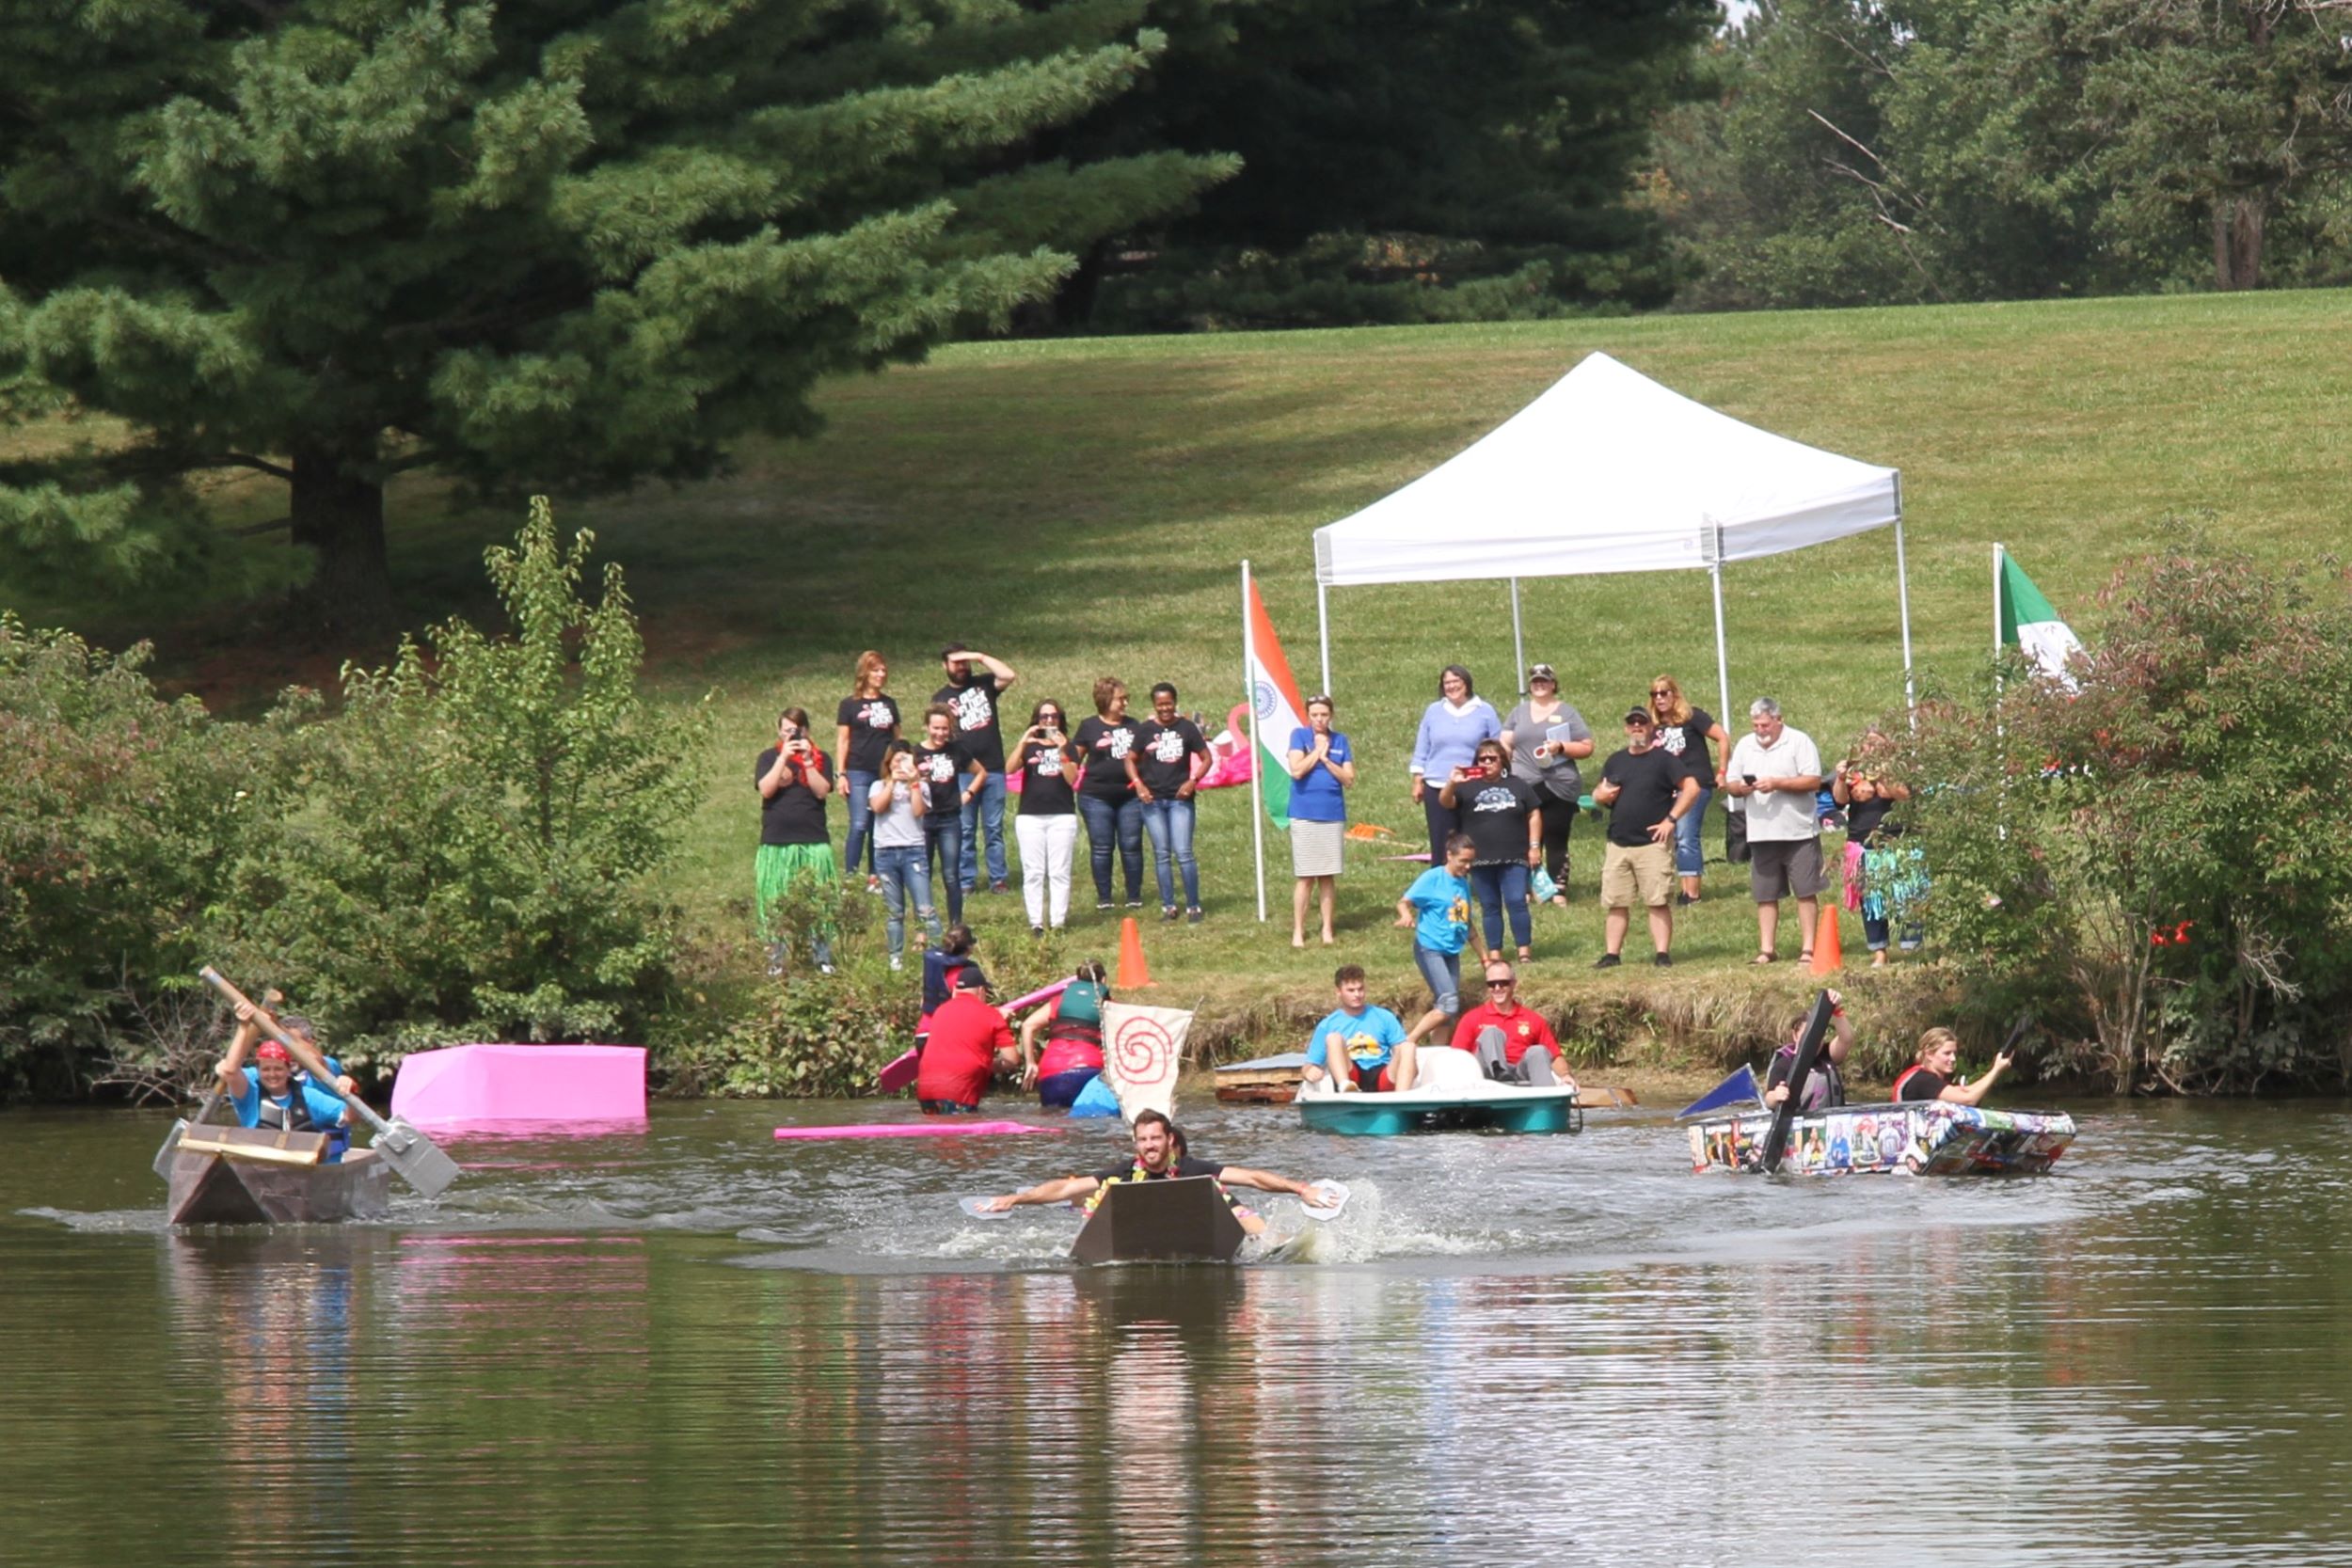 Teams in cardboard boats start paddling across the lake.